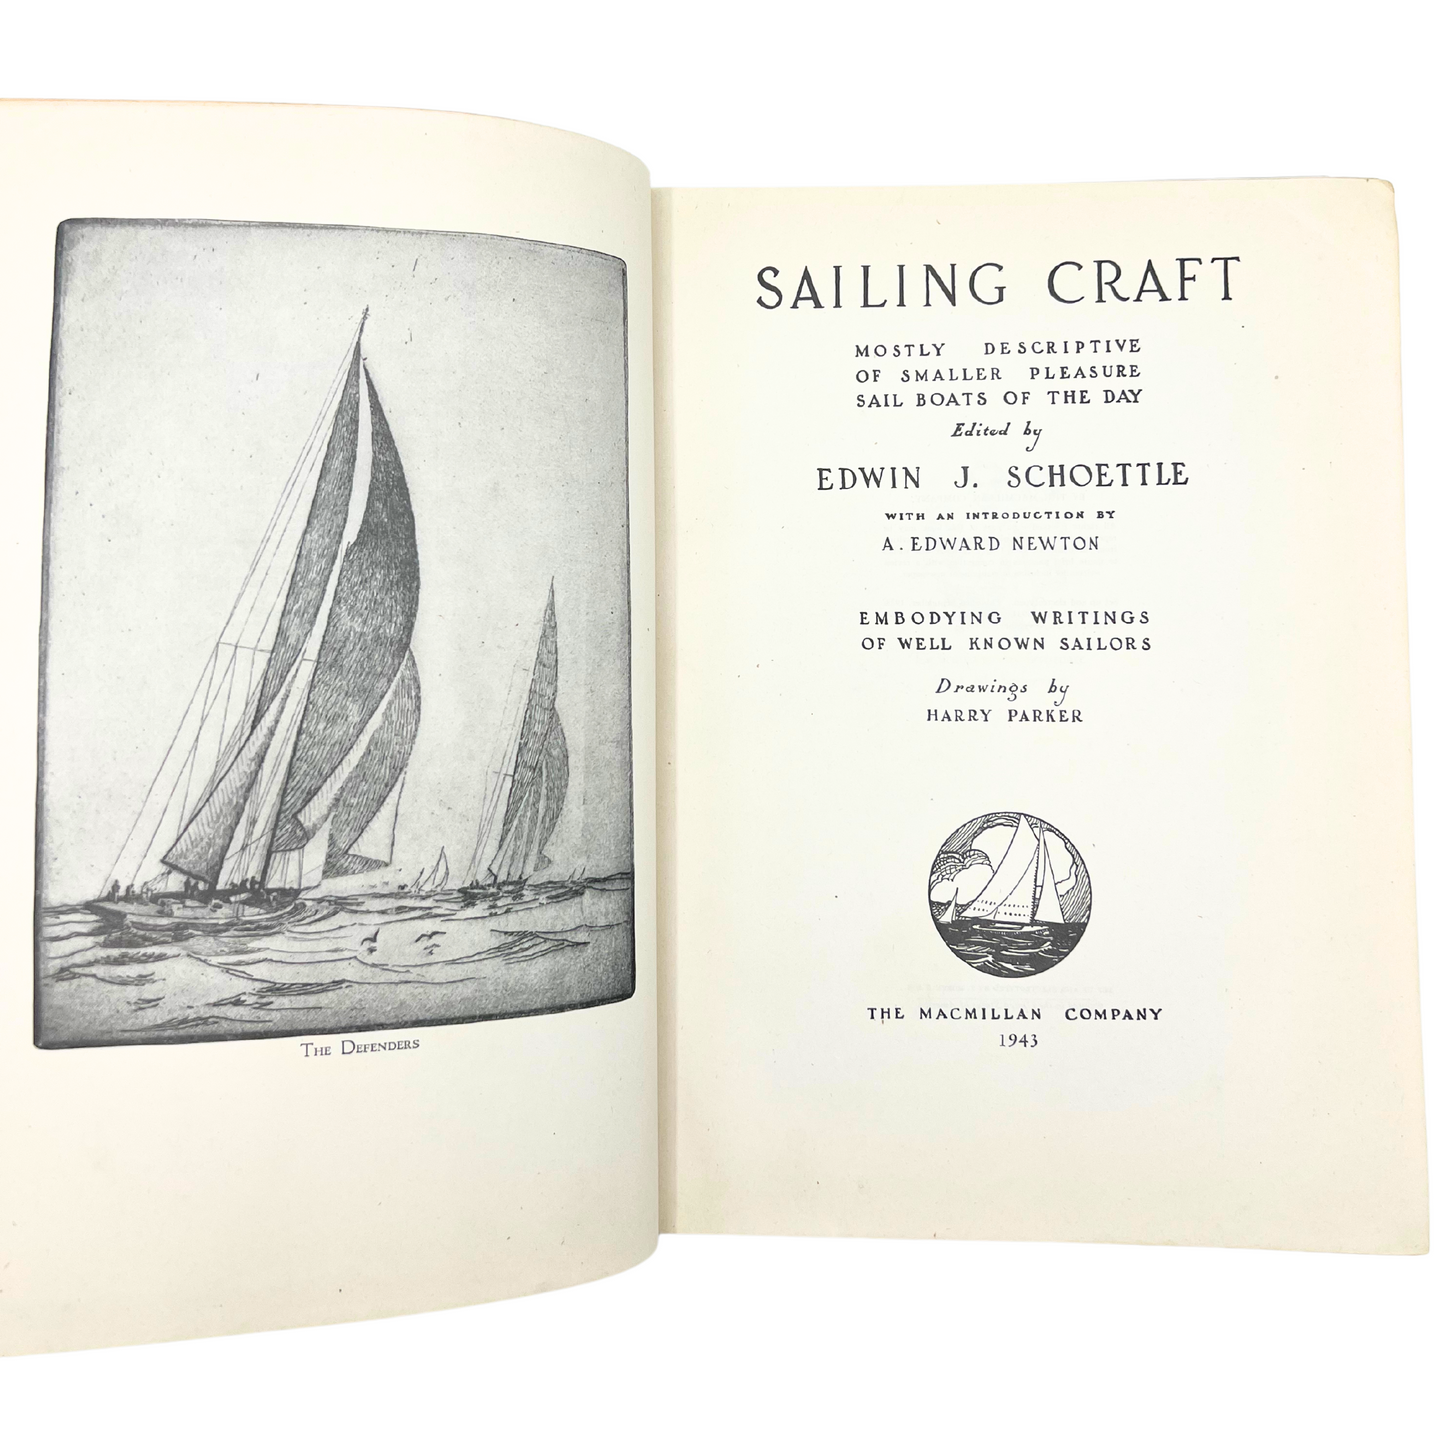 1943 hardcover book: Sailing Craft